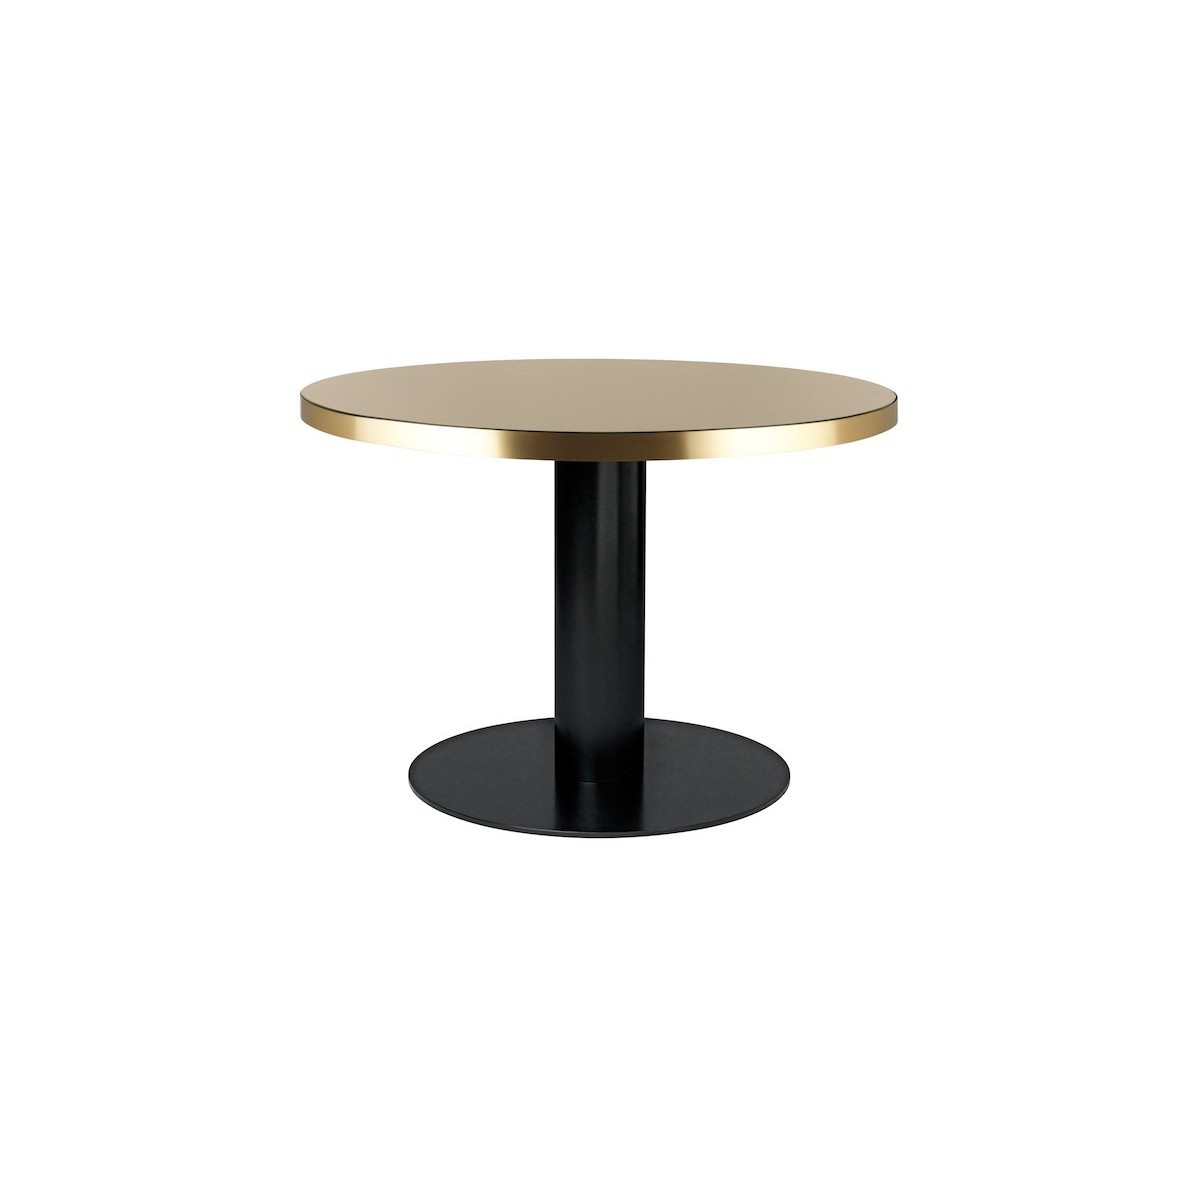 Sand + black base - Gubi 2.0 round table - glass table top